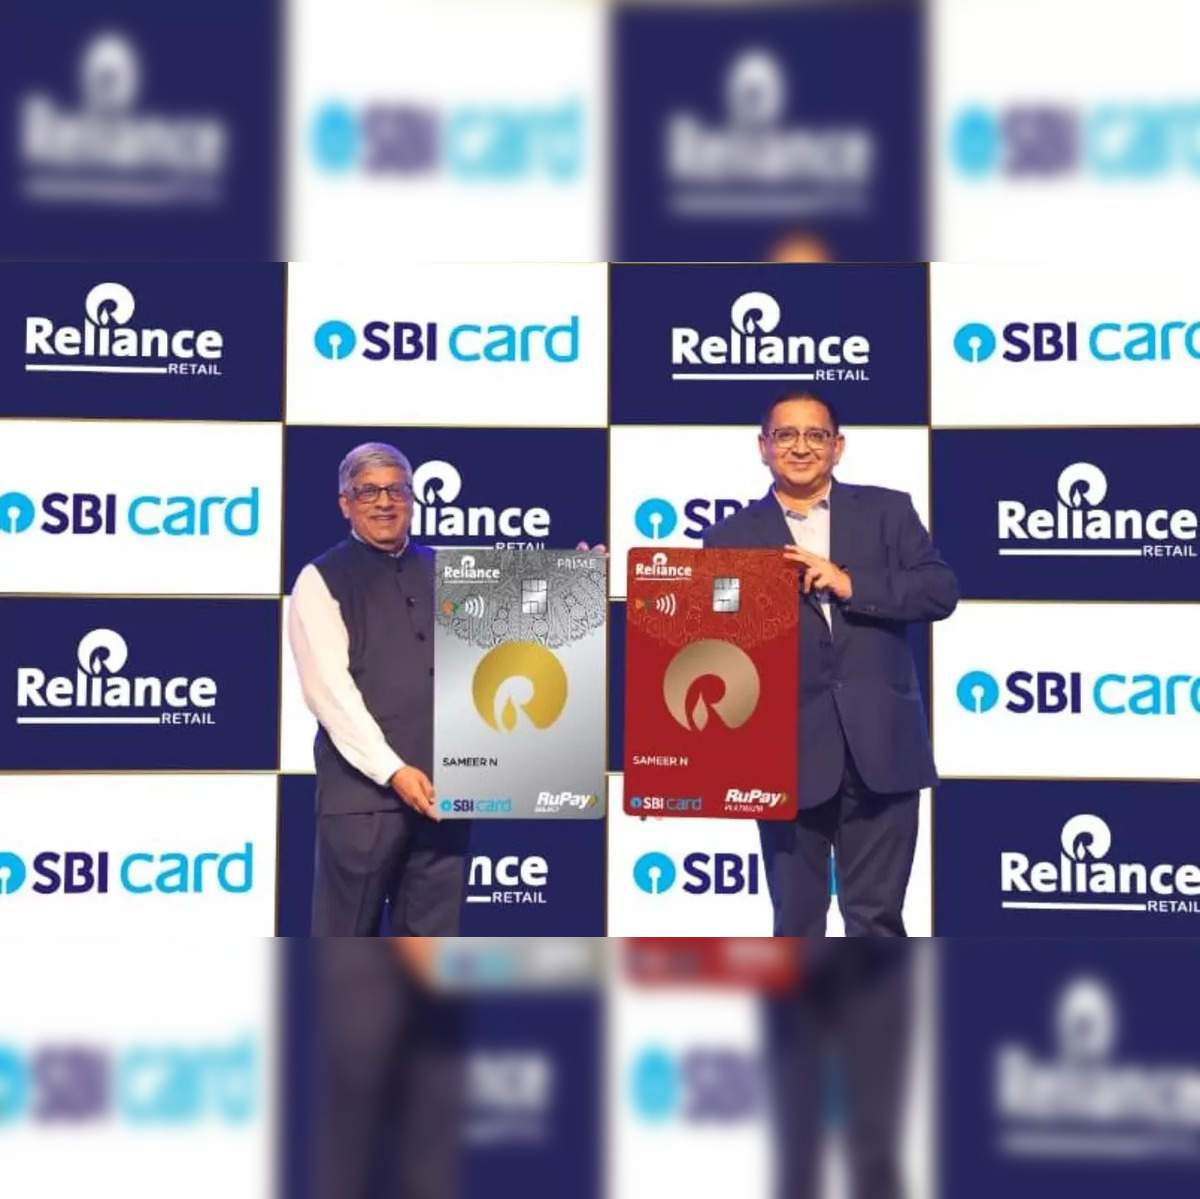 vishnu sharma - Branch relationship excutive - SBI Card | LinkedIn